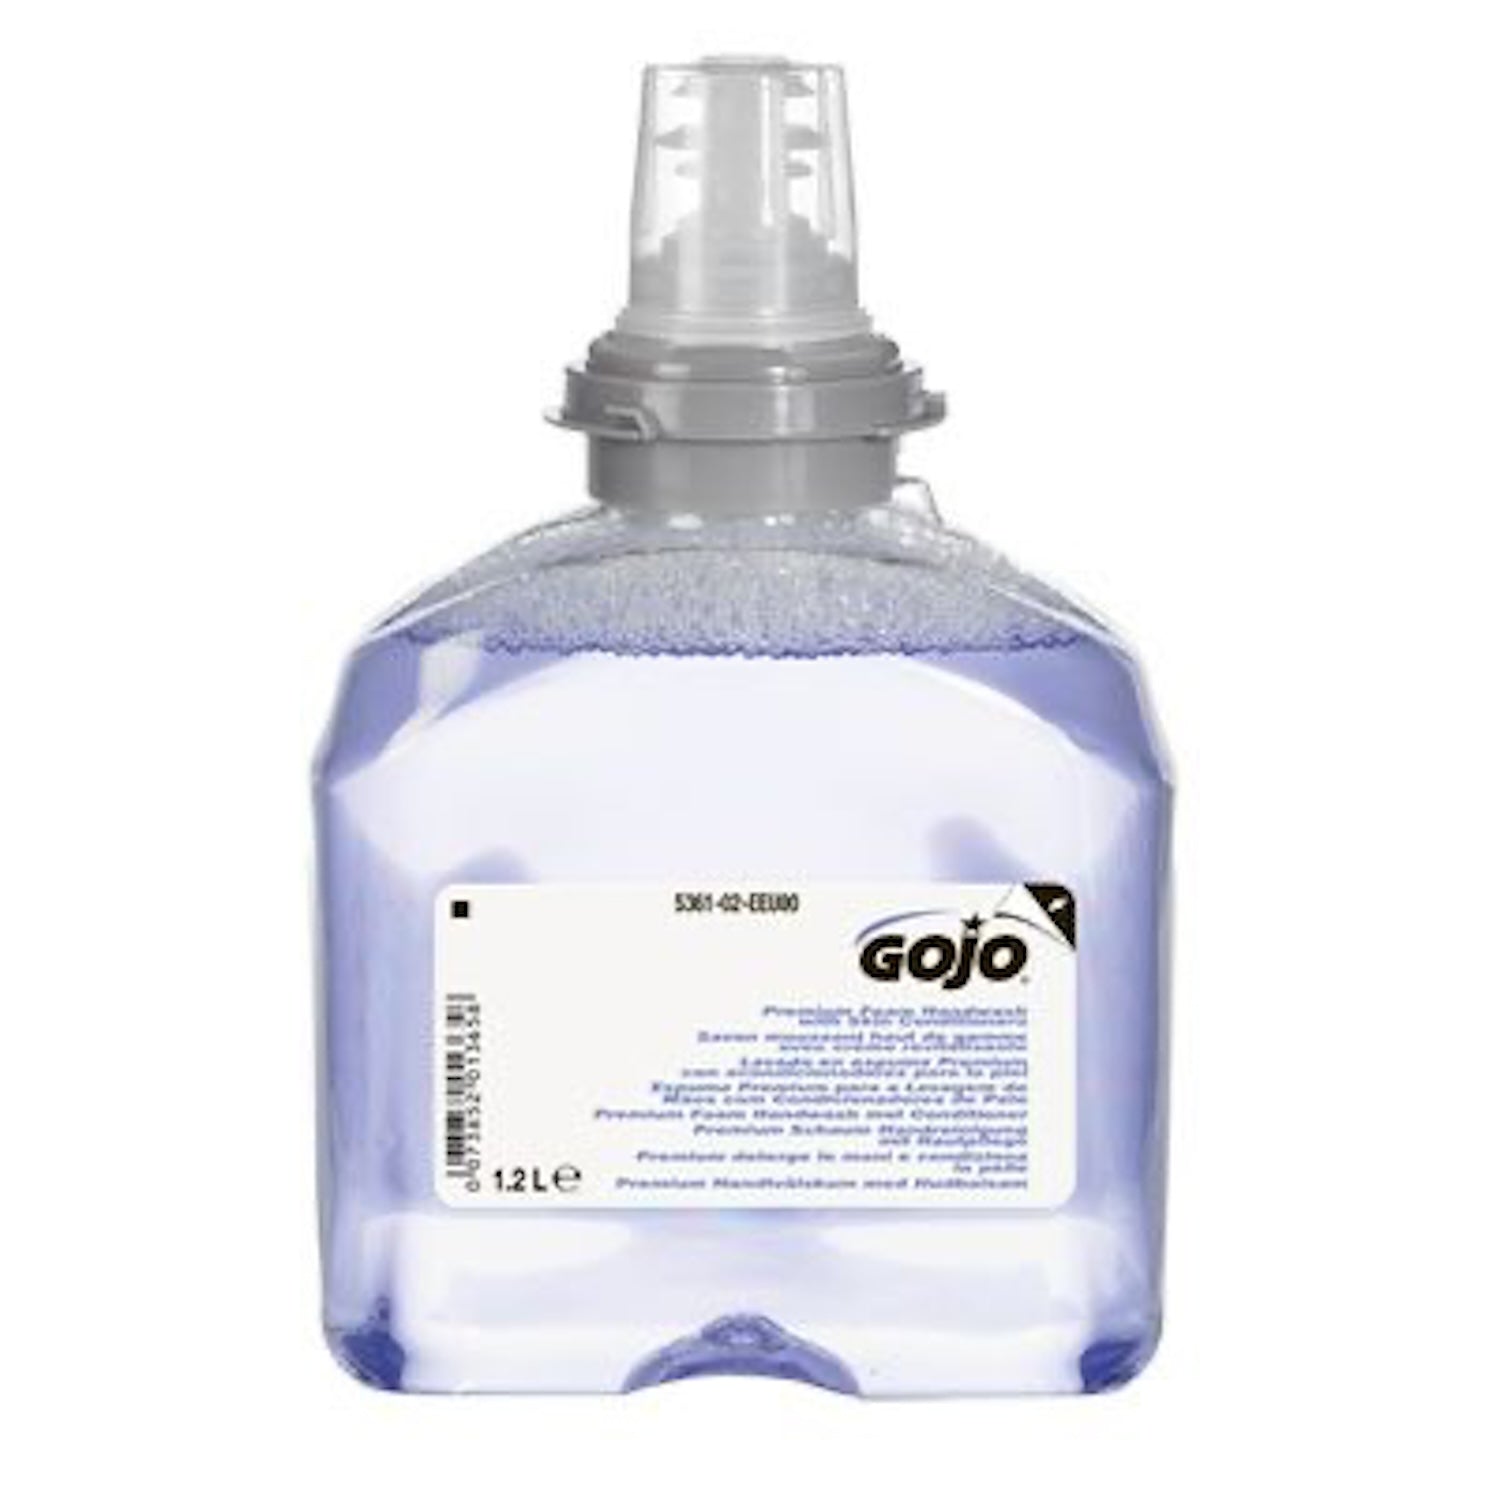 GOJO Premium Foam Handwash Refill with Skin Conditioner | 1200ml